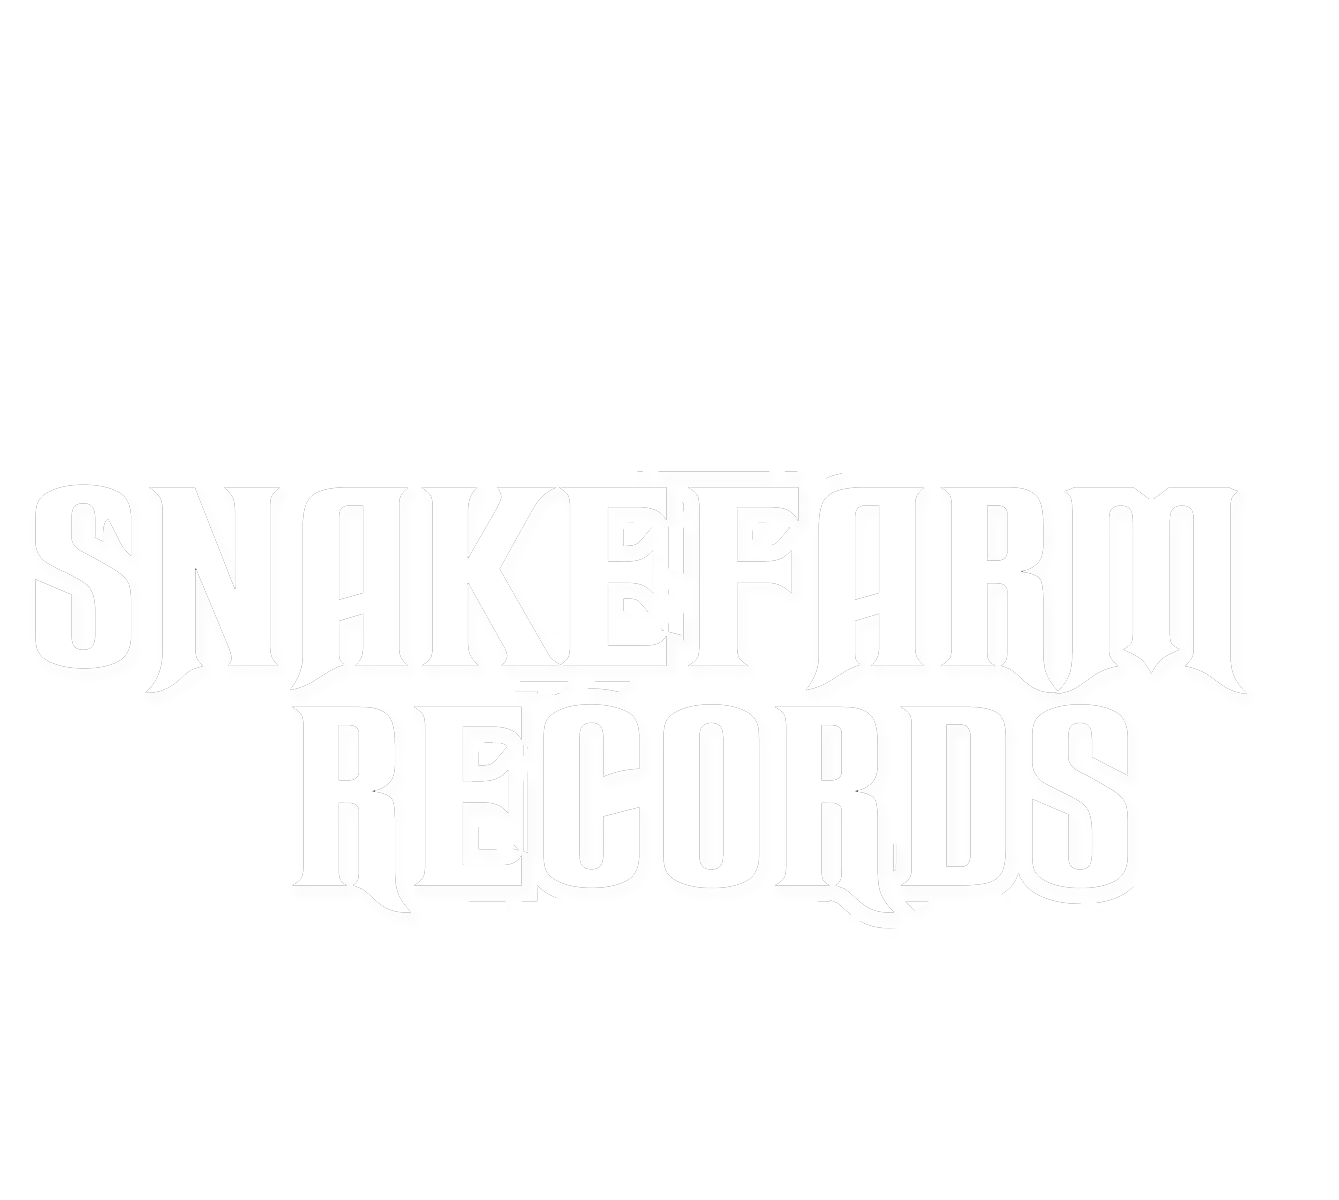 Snakefarm Records